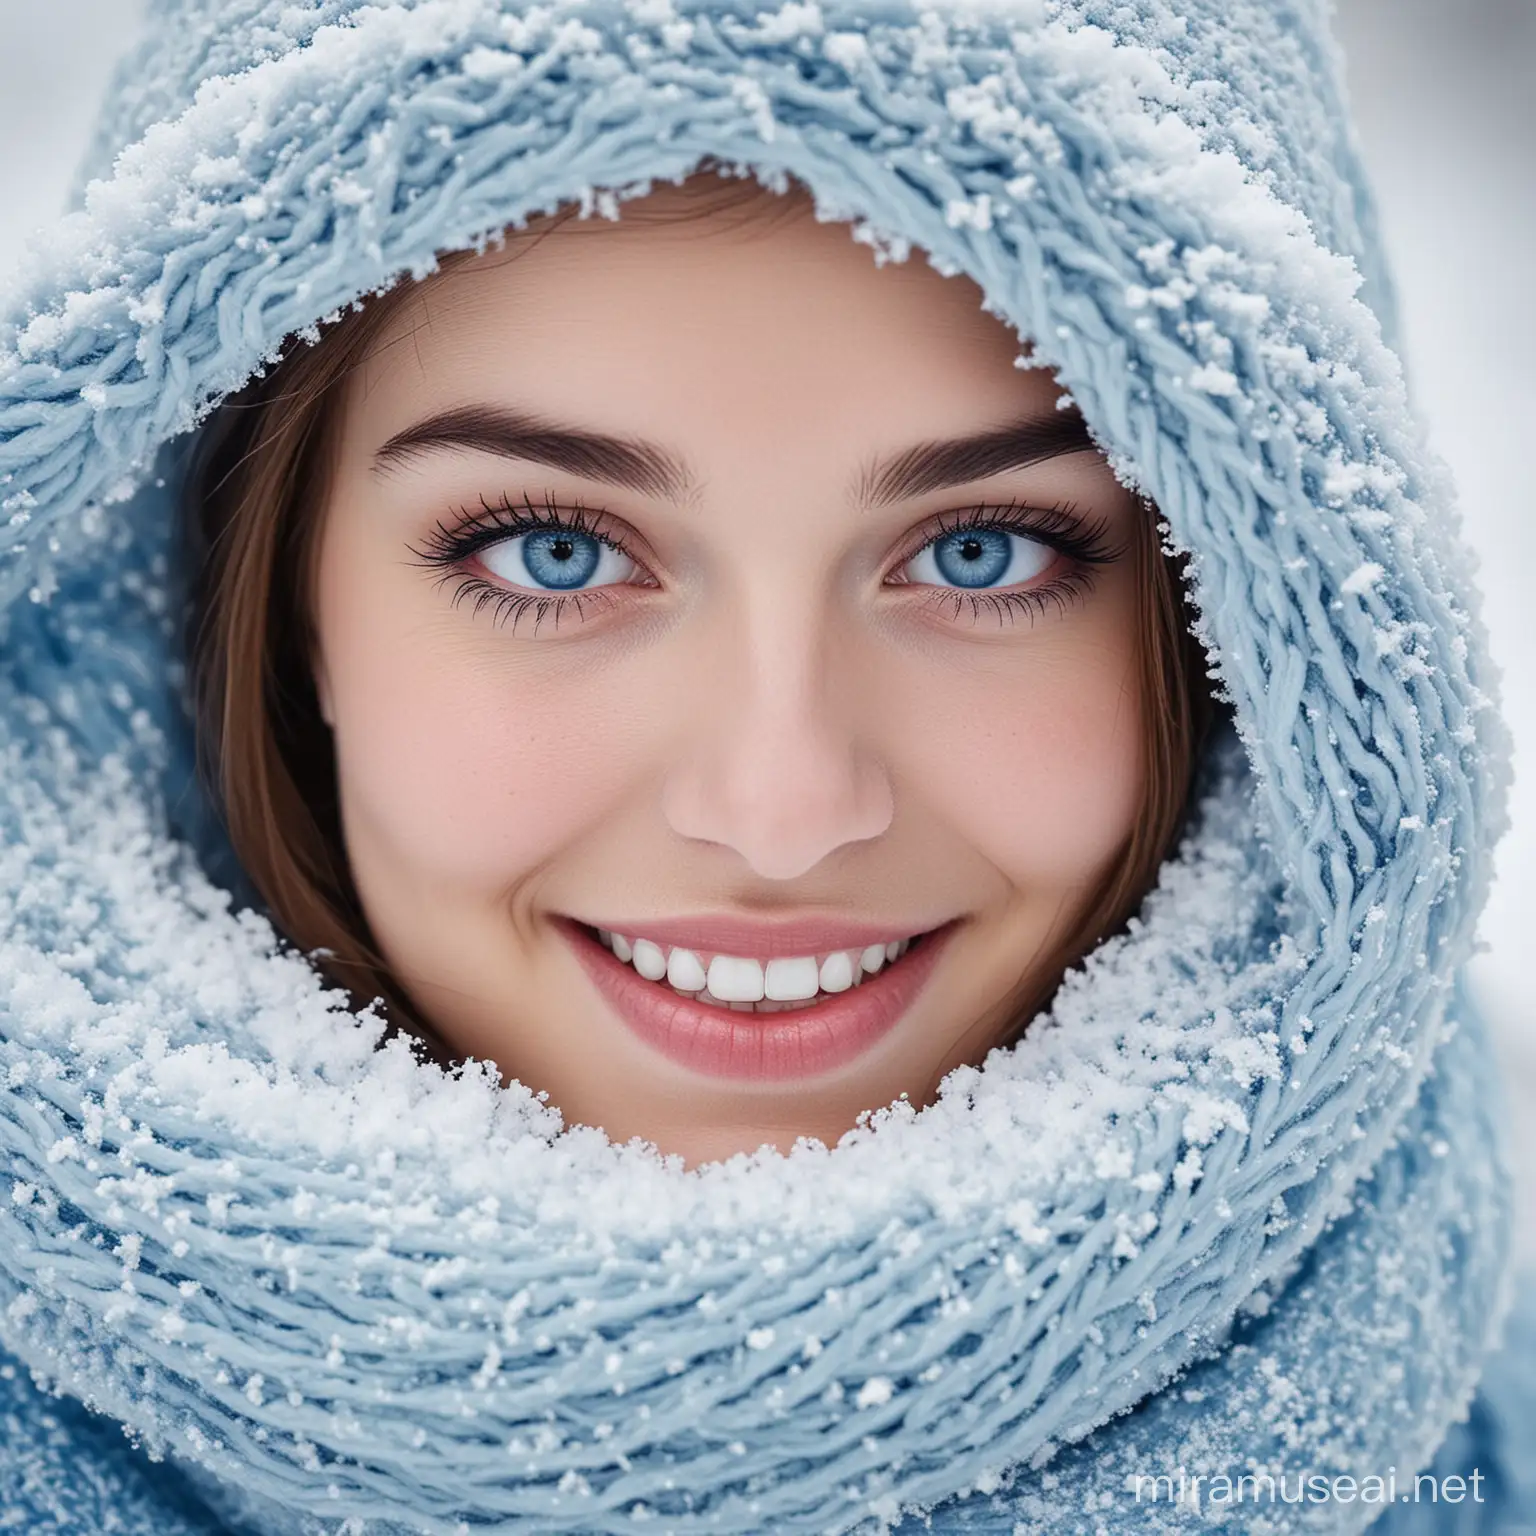 Joyful Snow Woman with Brilliant Blue Eyes